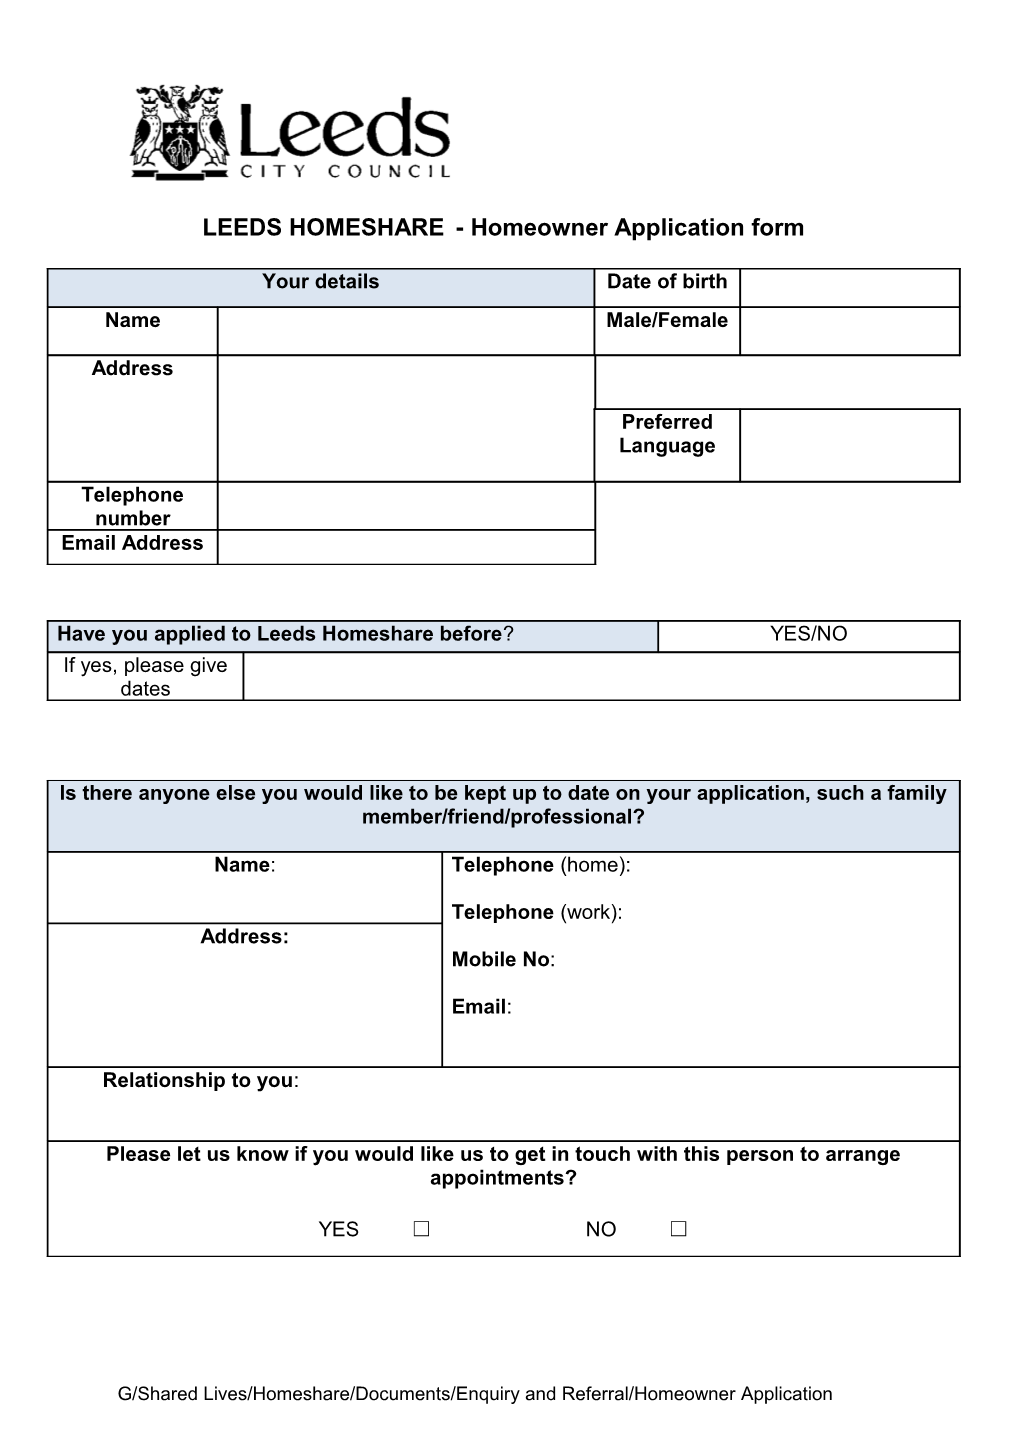 LEEDS HOMESHARE - Homeowner Application Form